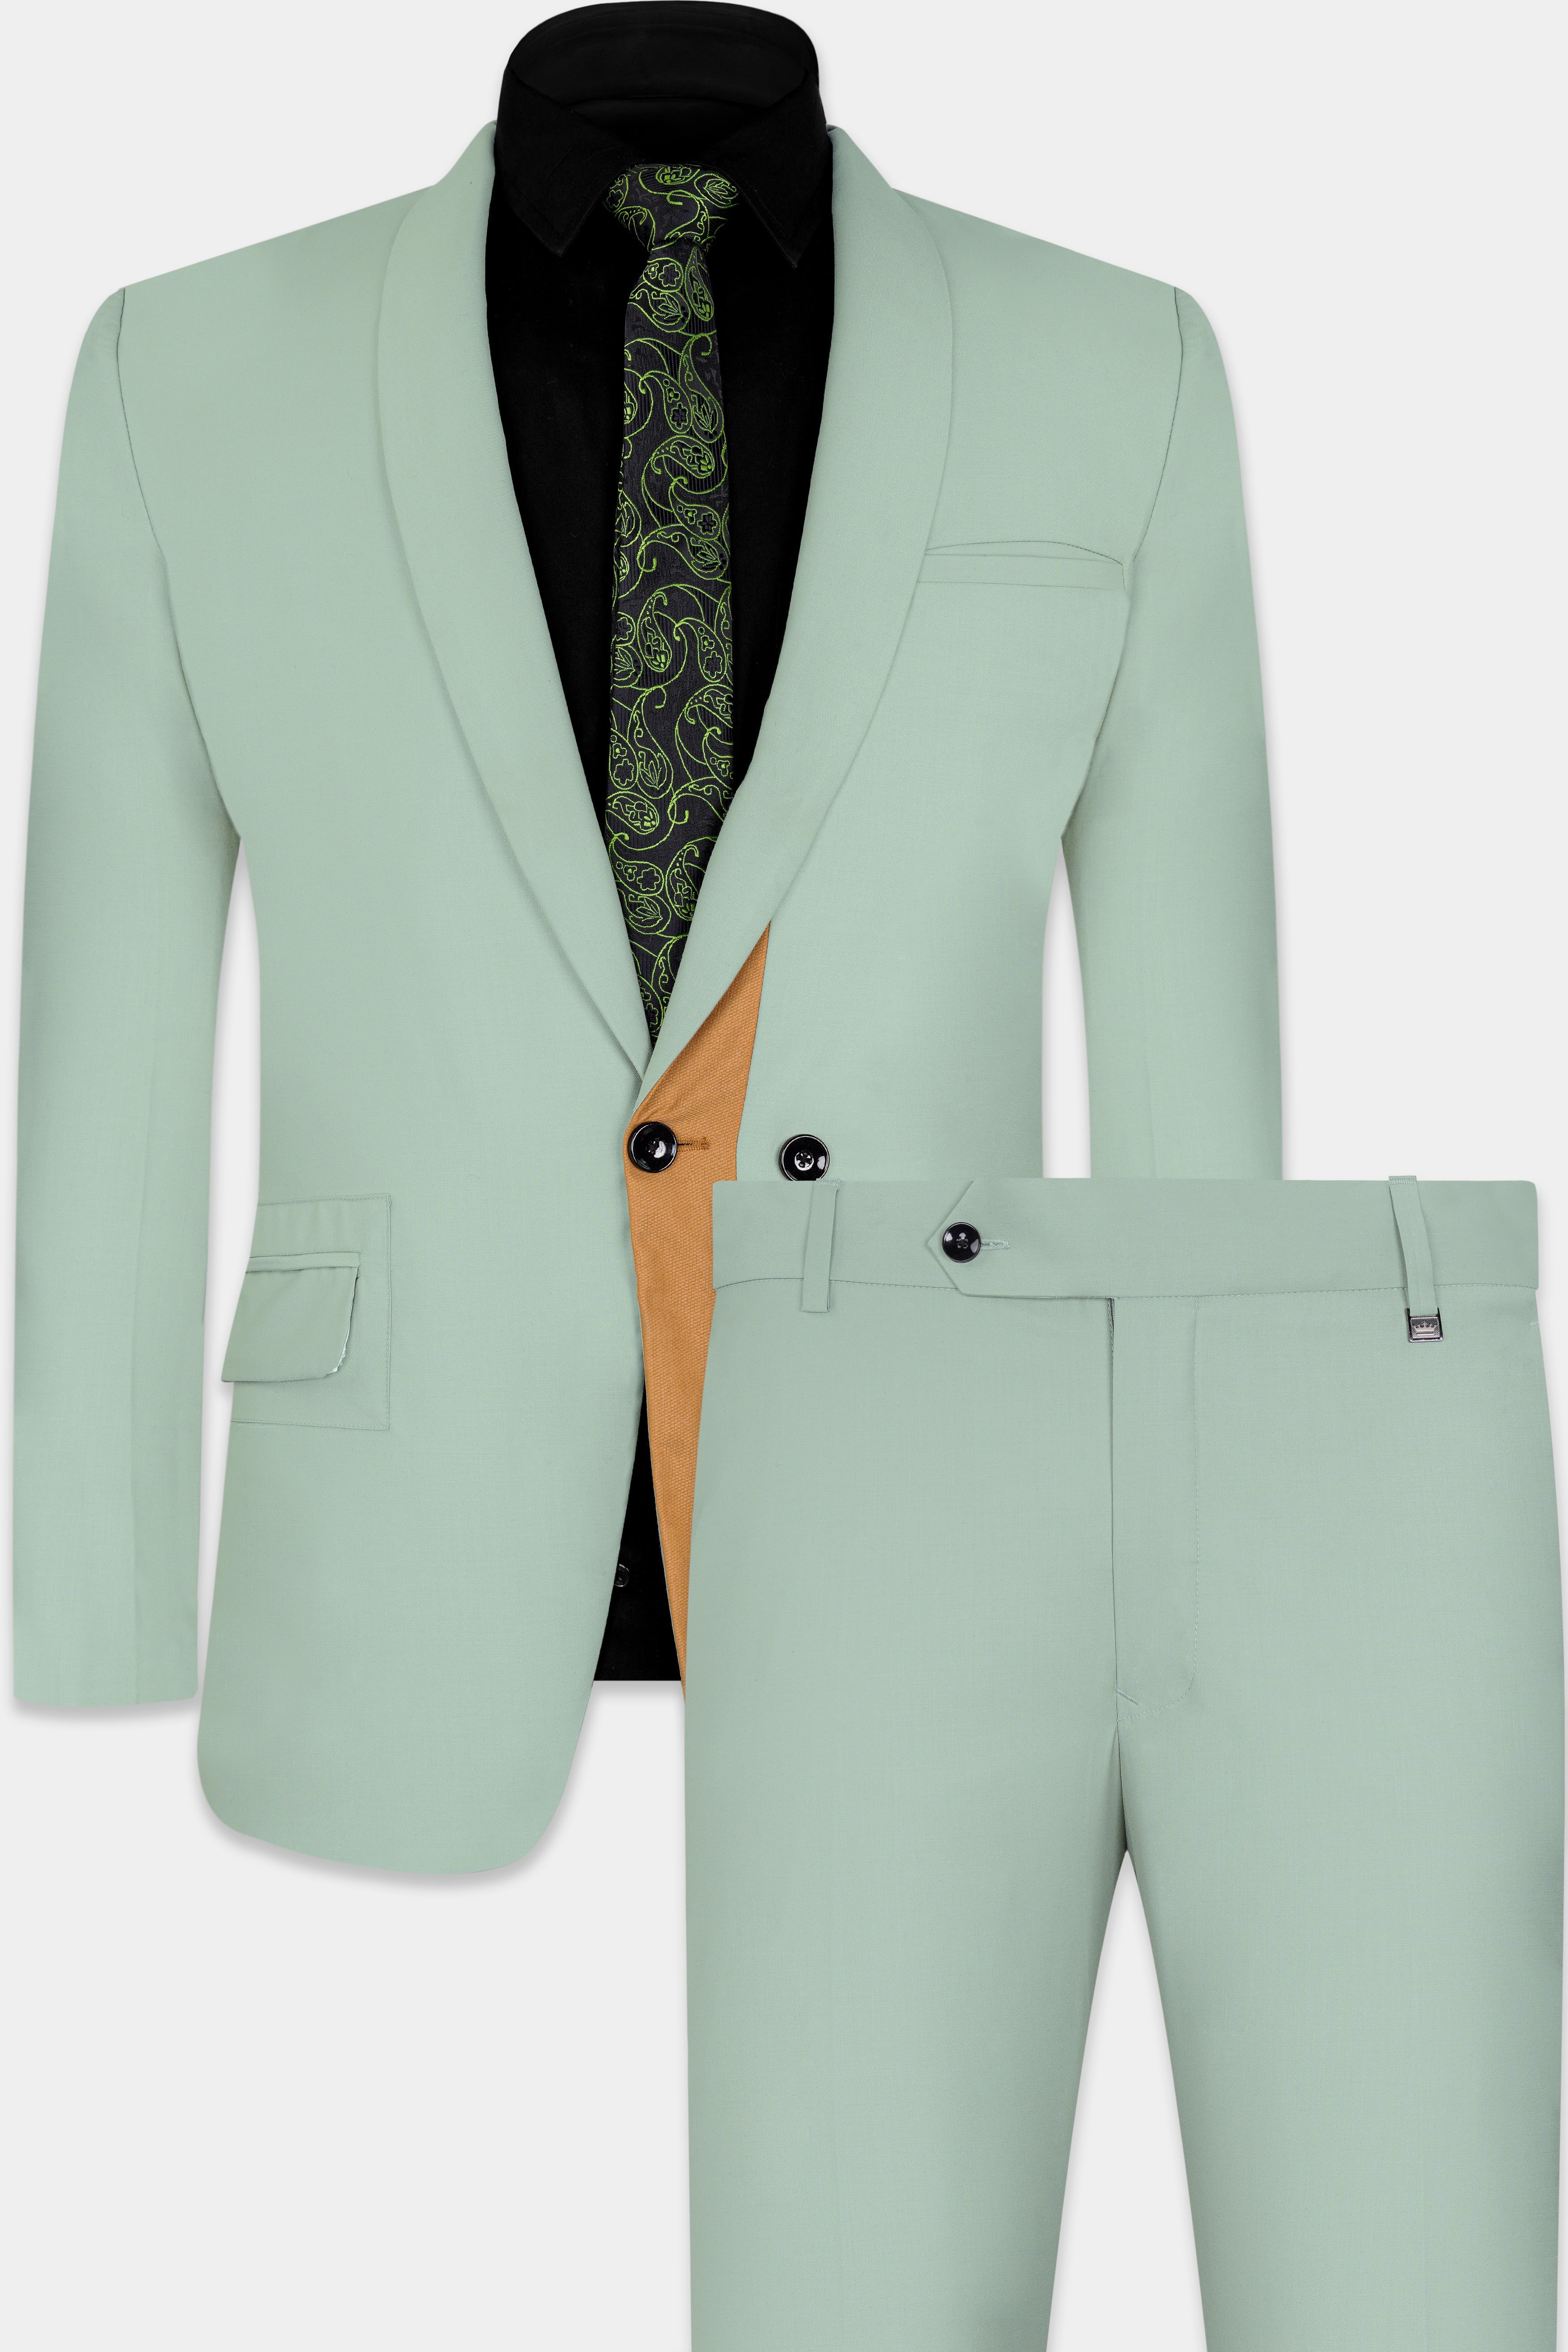 GREEN WEDDING Three Piece Suits for Men Wedding Groom Suit Elegant Green  Suit - Etsy Hong Kong